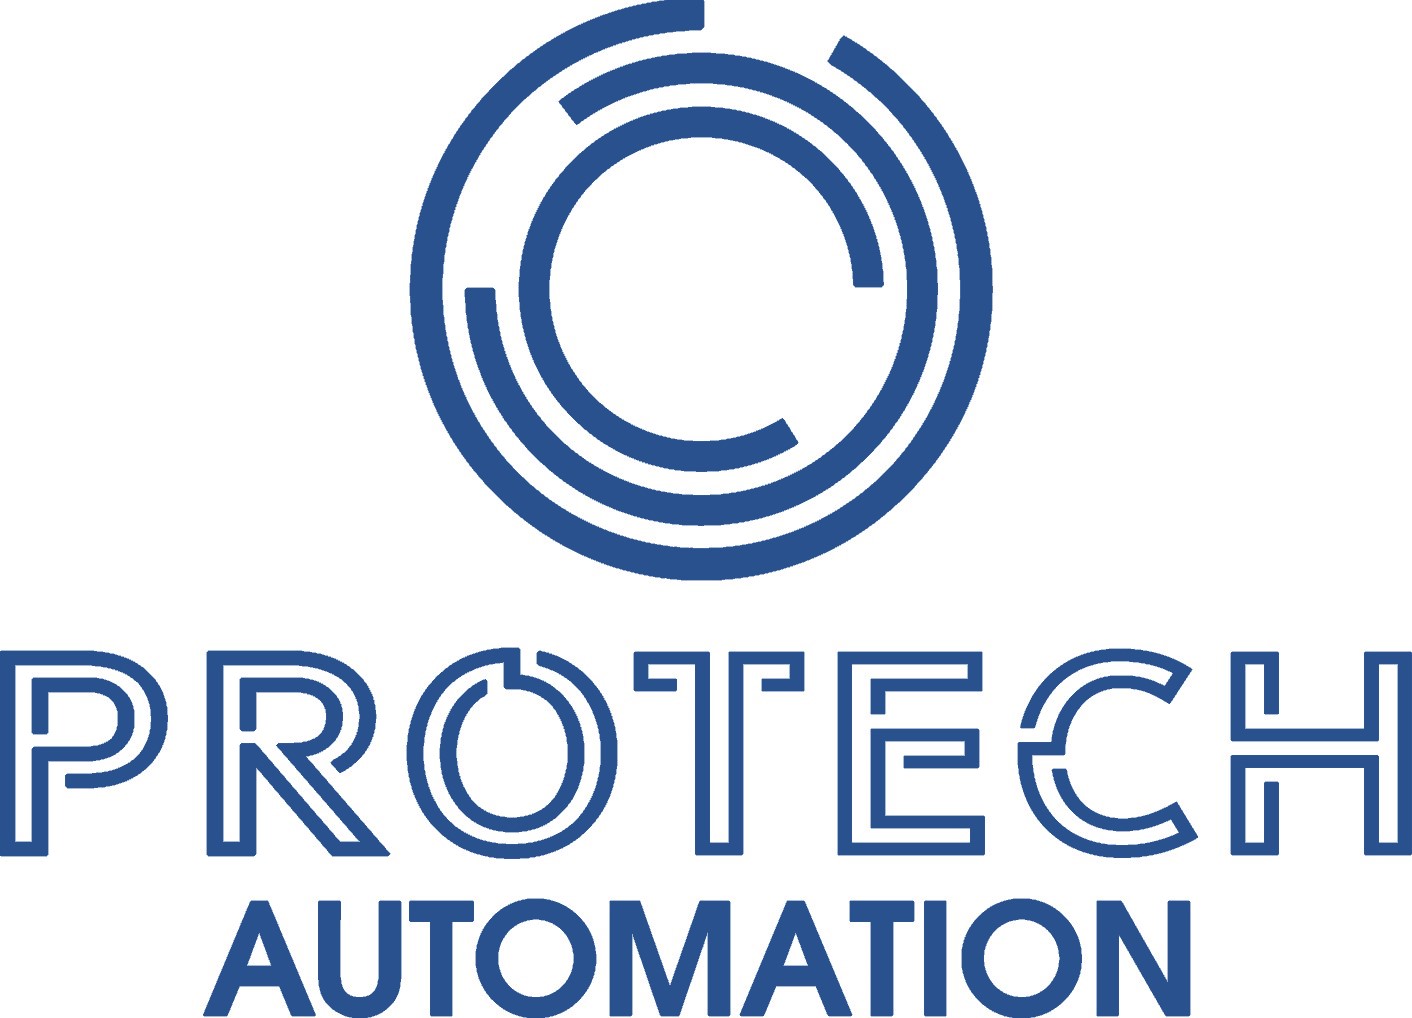 Protech Automation logo